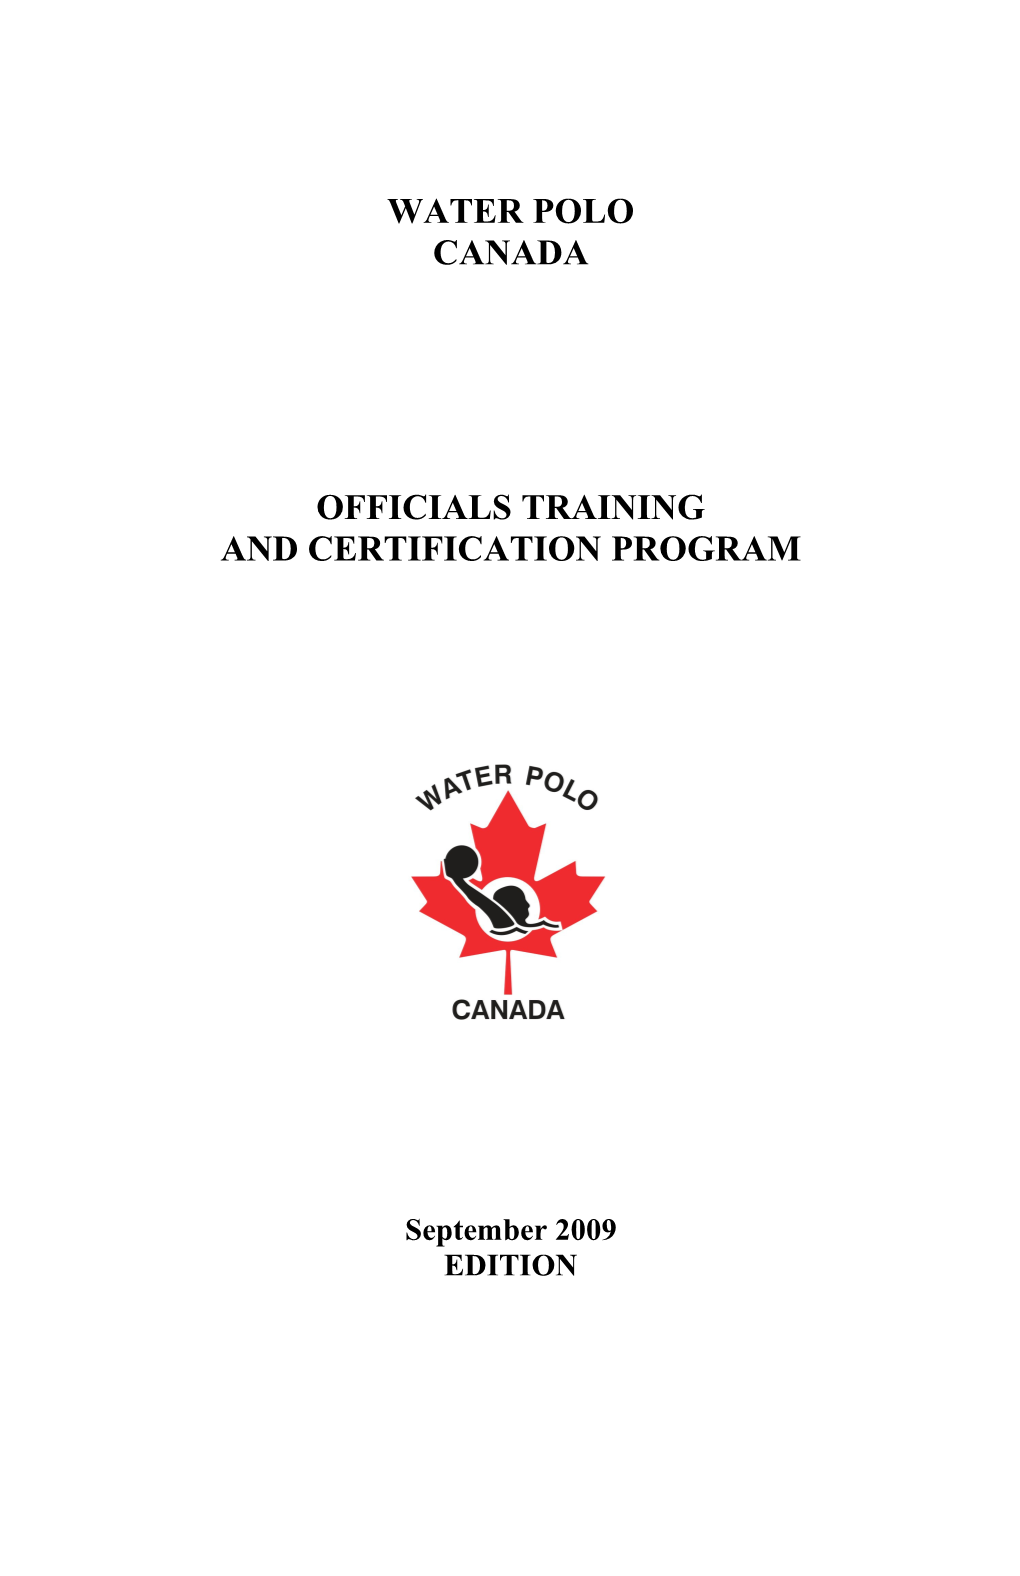 Officials Training